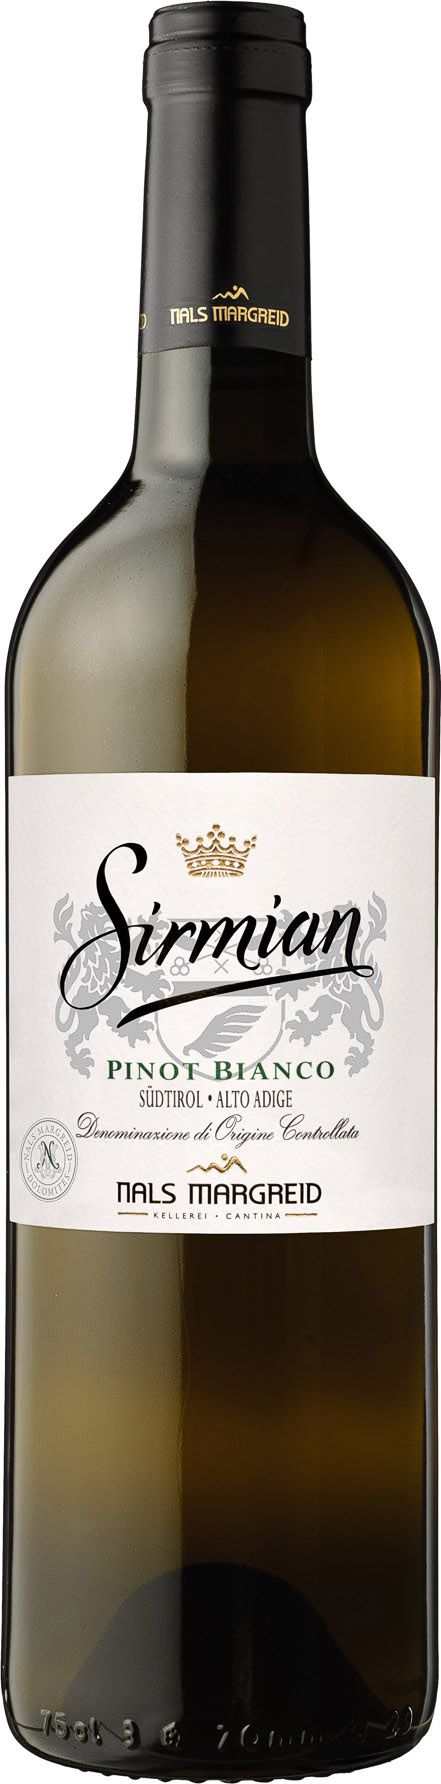 Nals Margreid, Sirmian Pinot Blanco, 2013